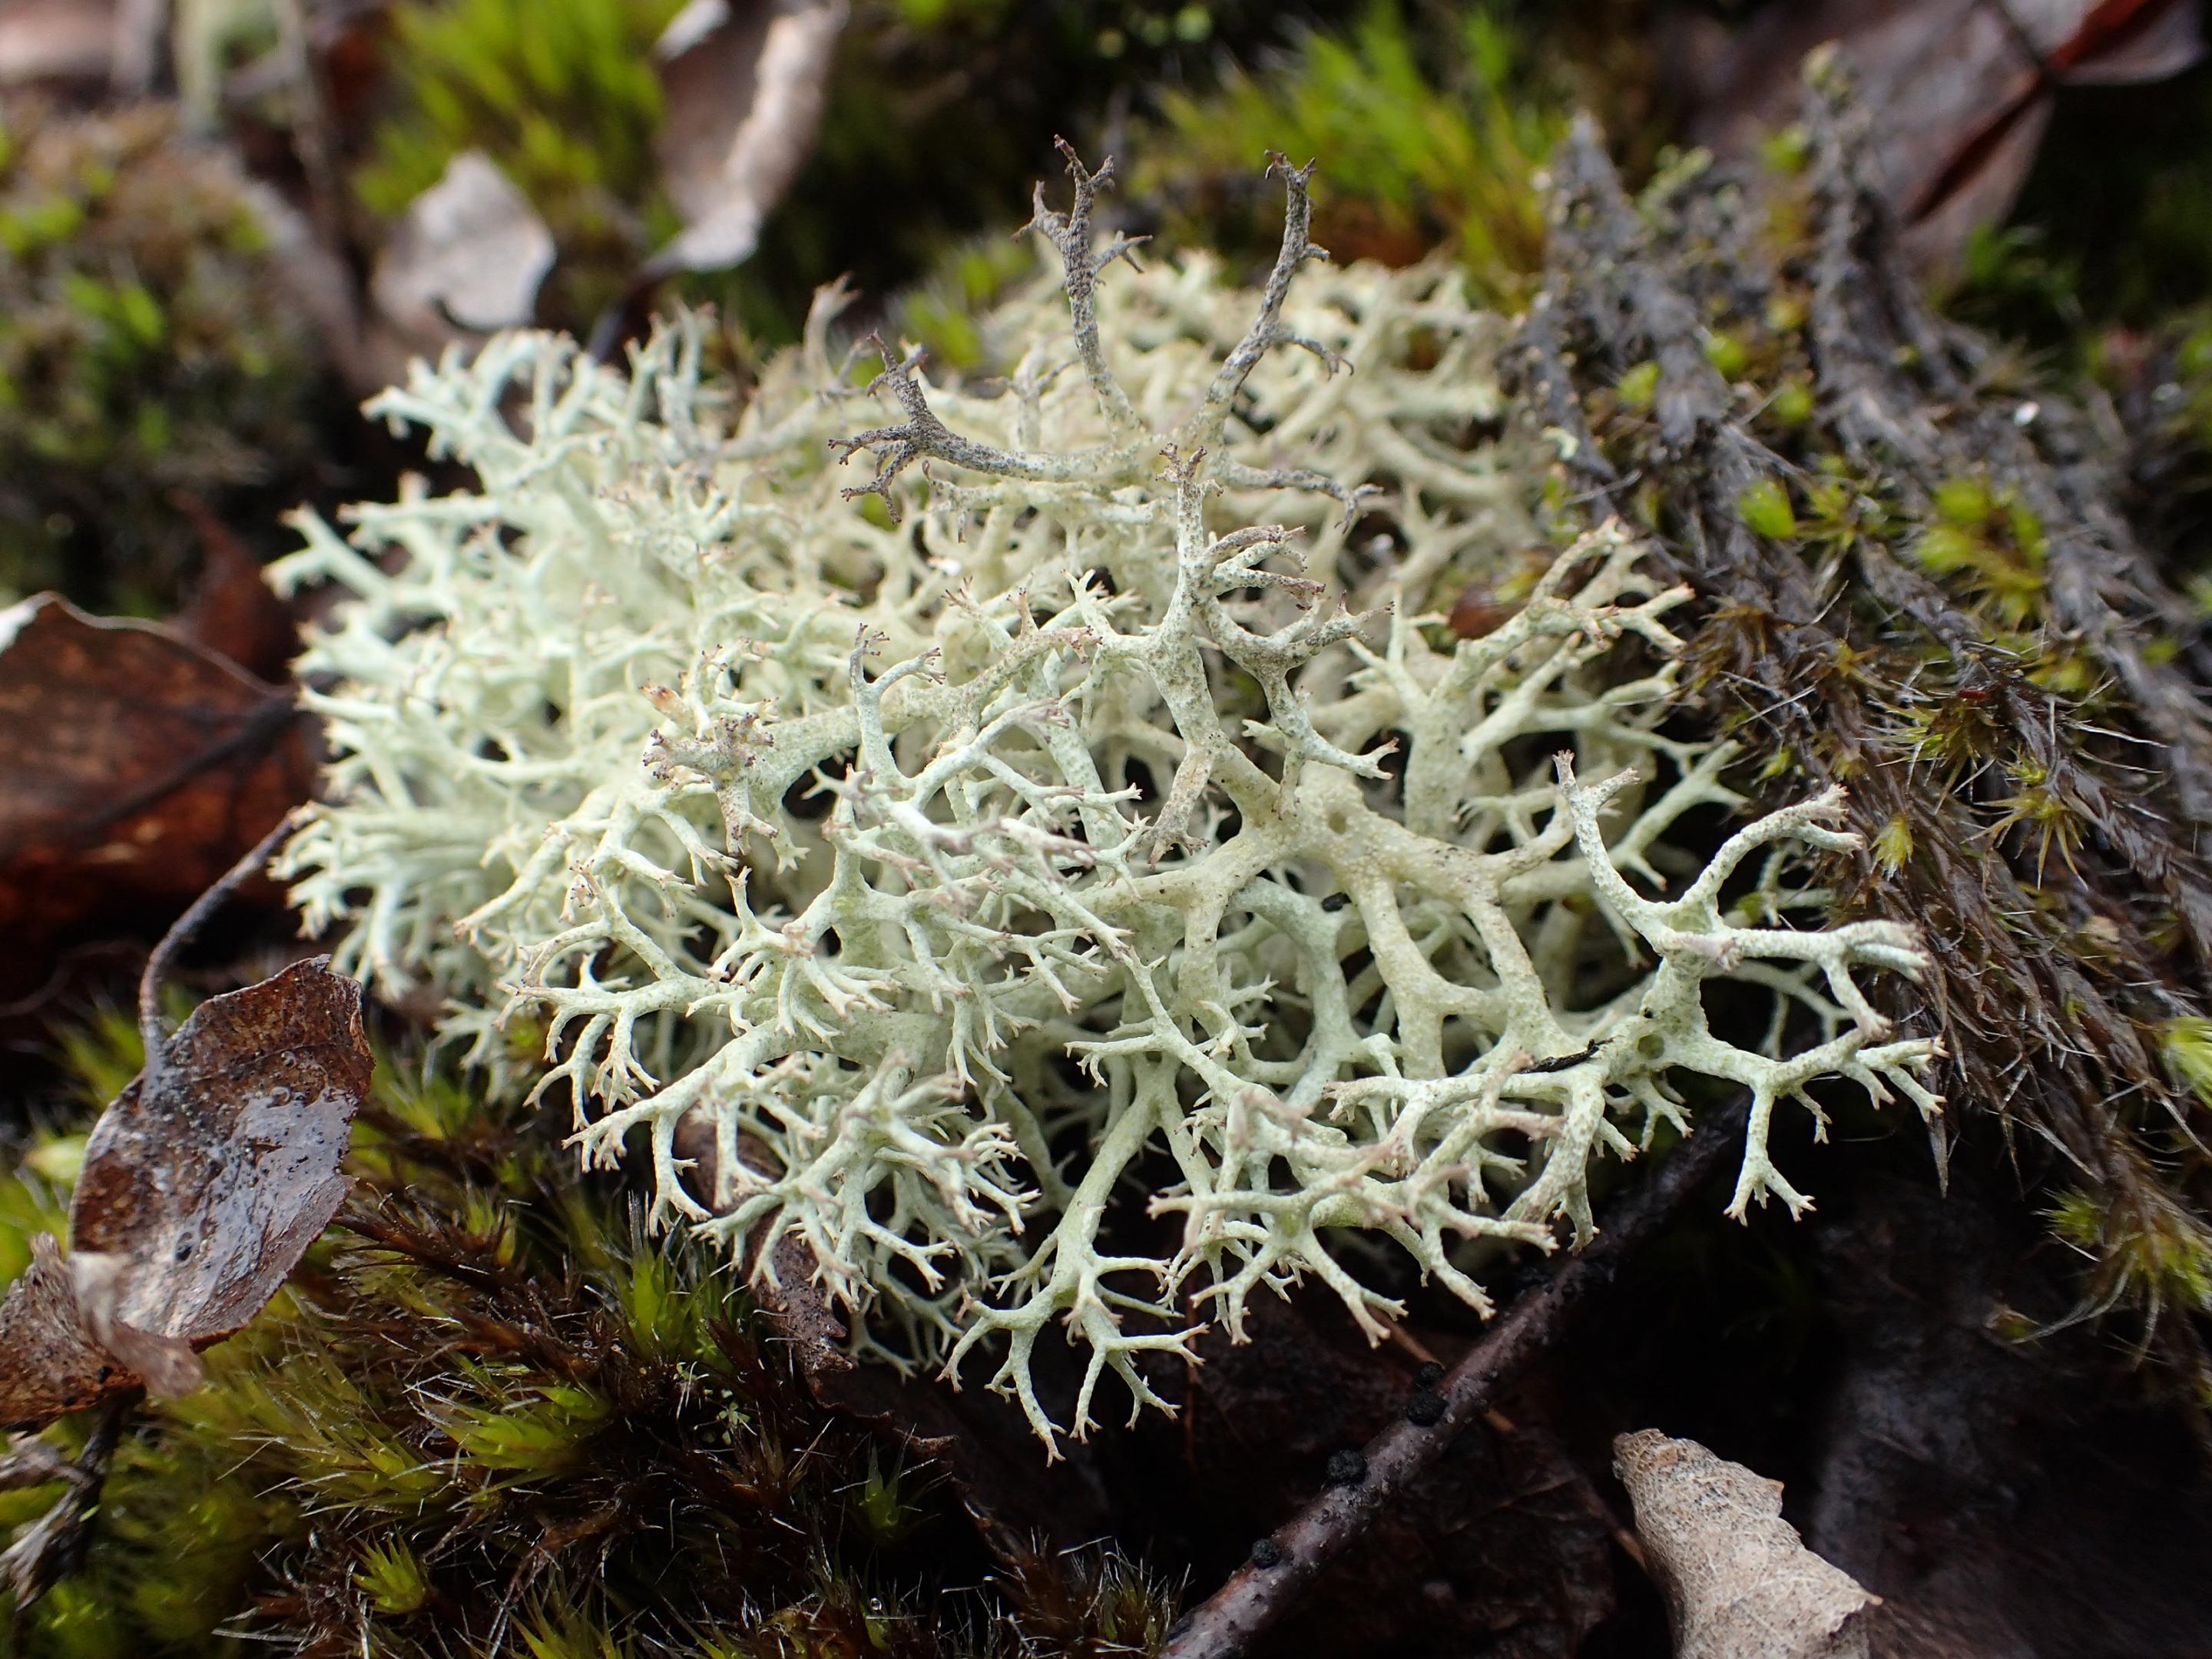 Cladonia portentosa lichen